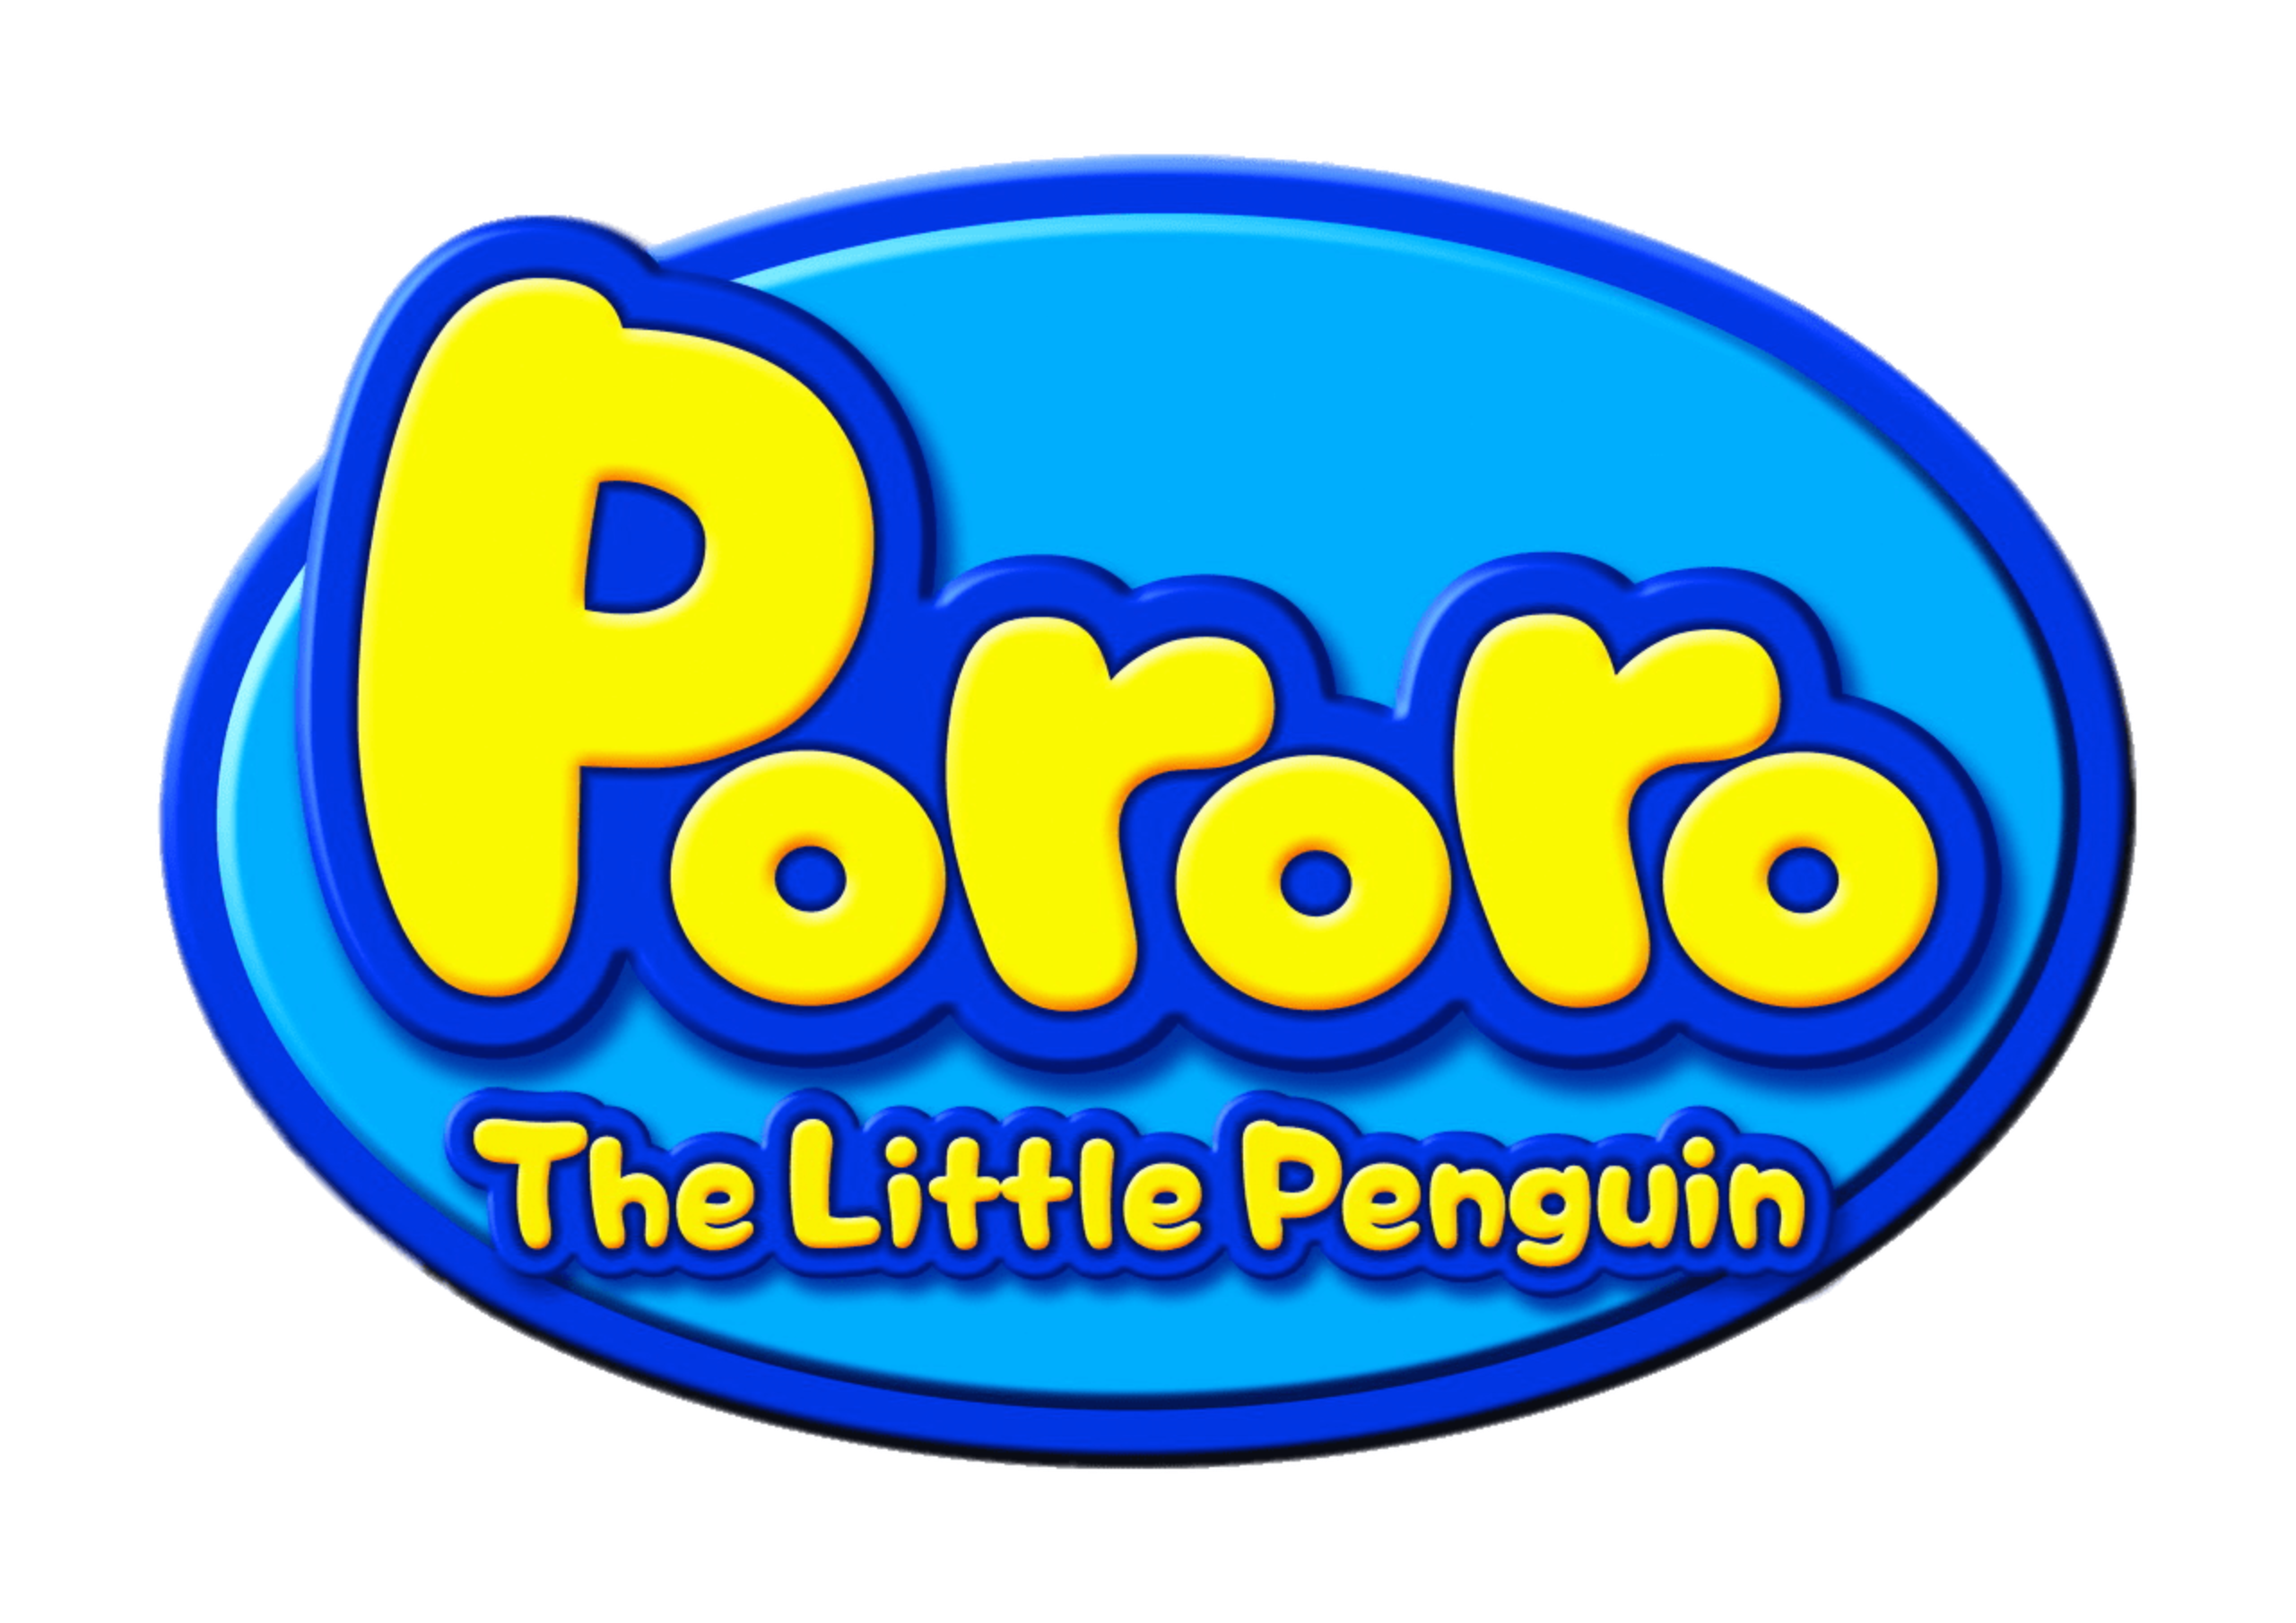 Pororo the Little Penguin Complete 